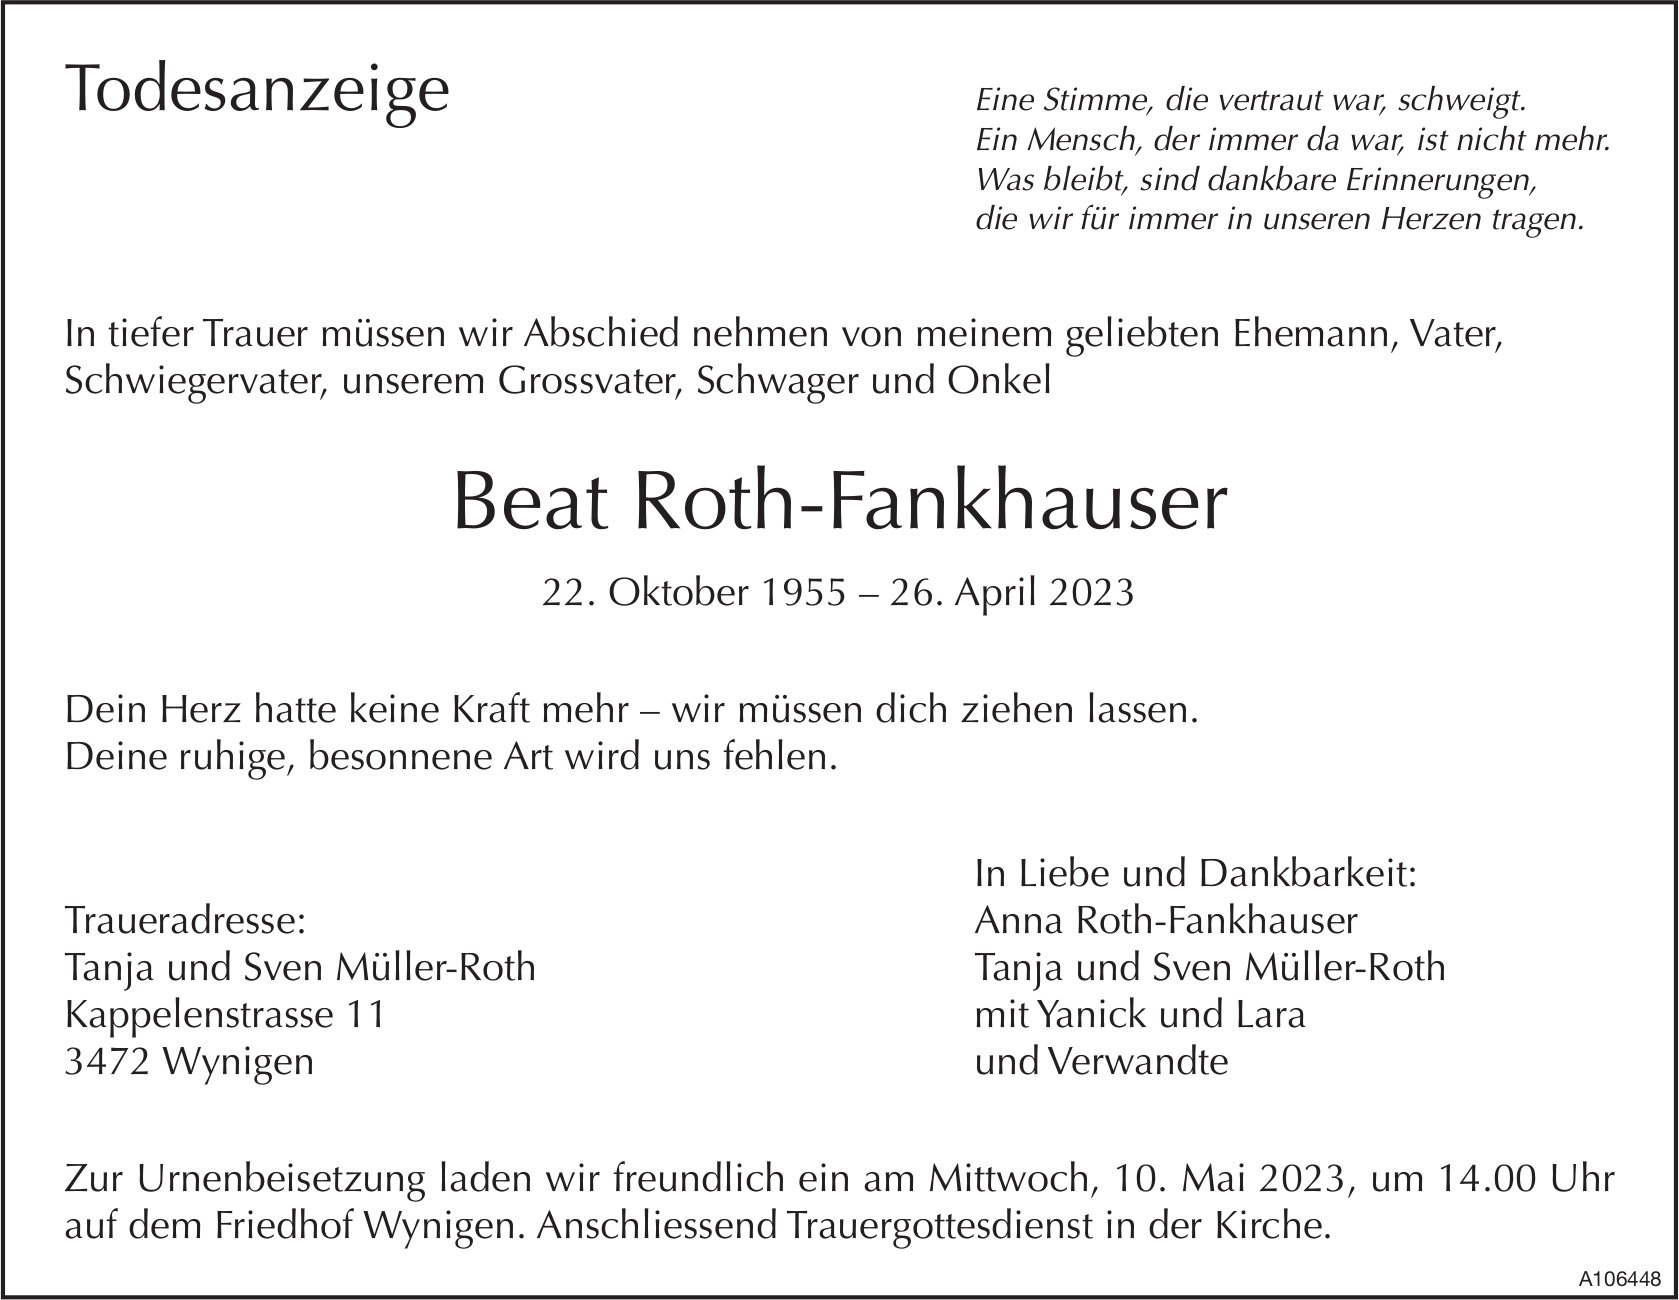 Beat Roth-Fankhauser, April 2023 / TA